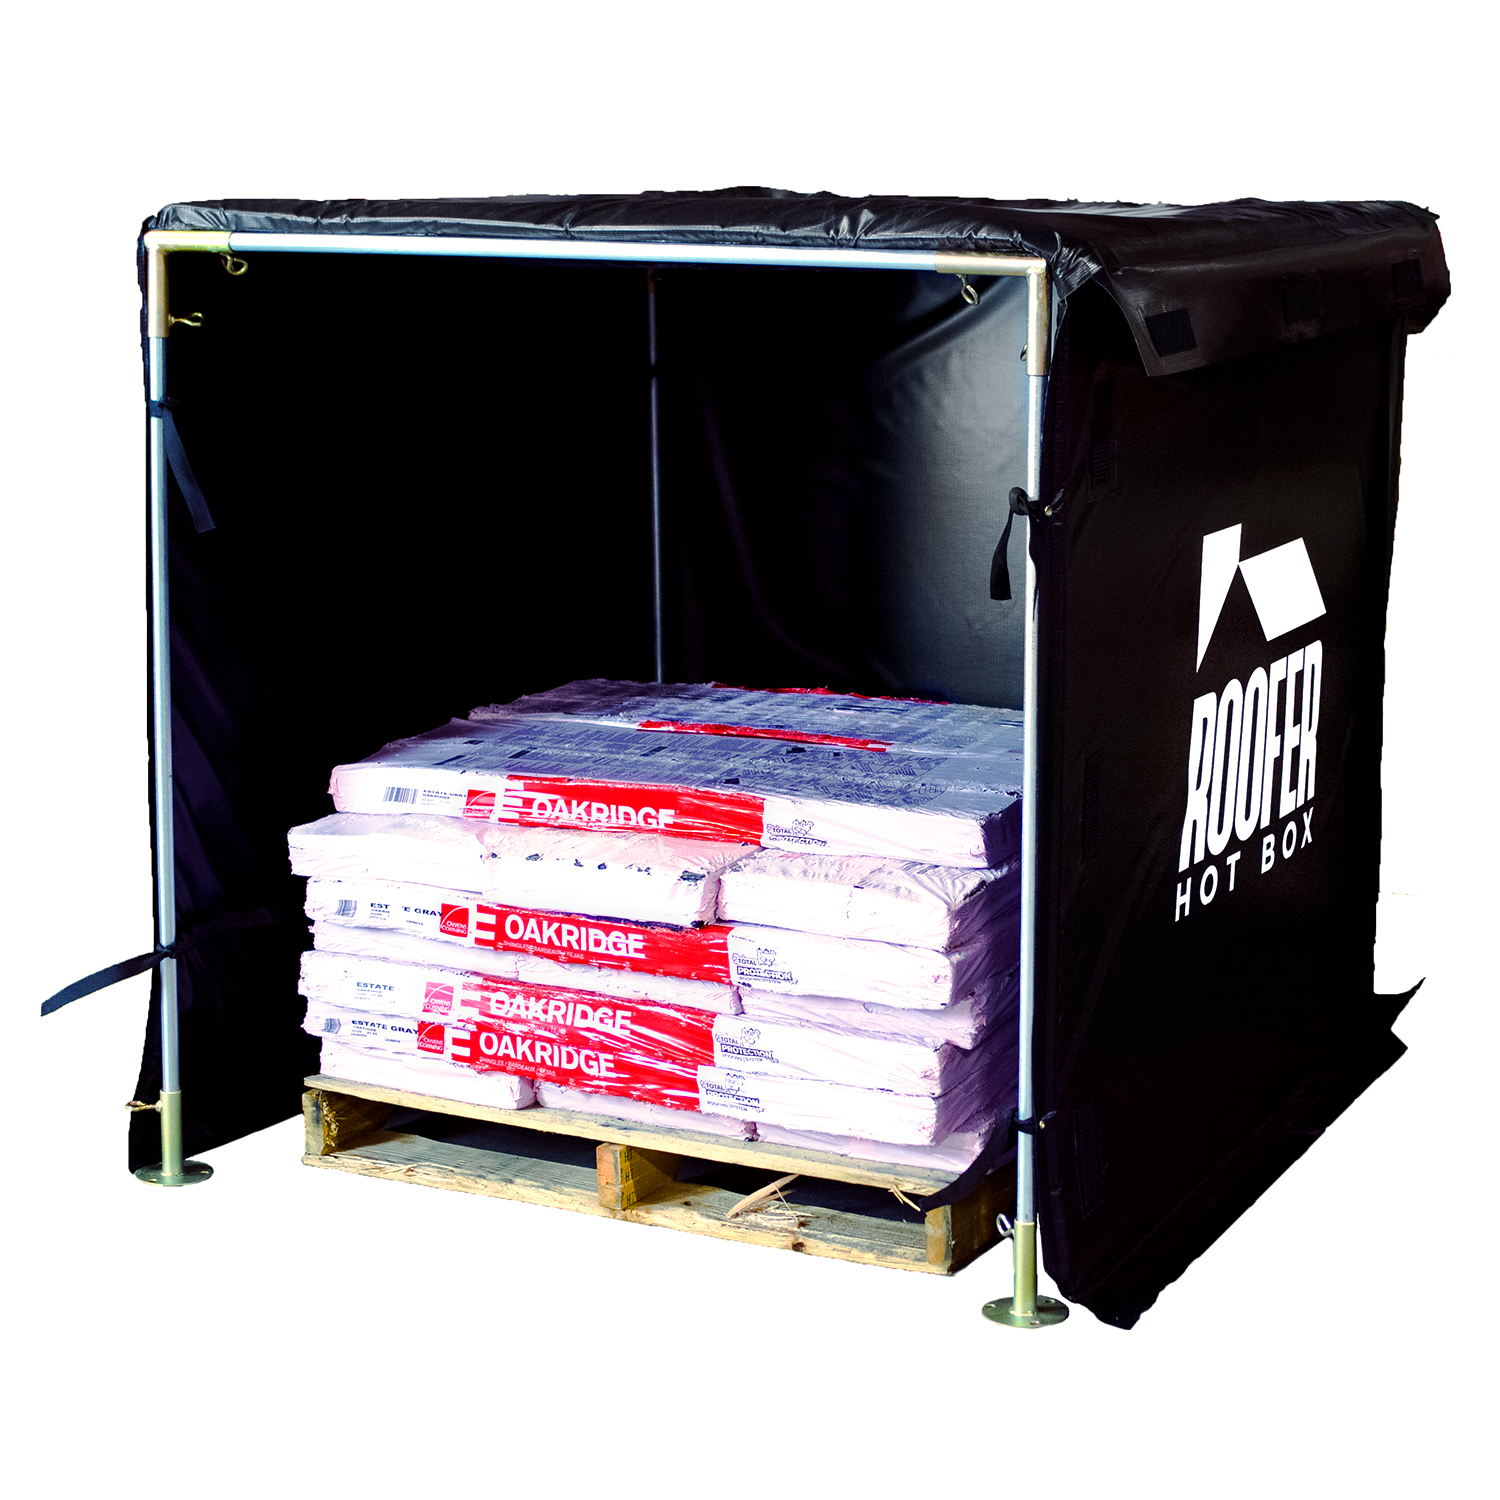 Roofer Hot Box - Powerblanket Image